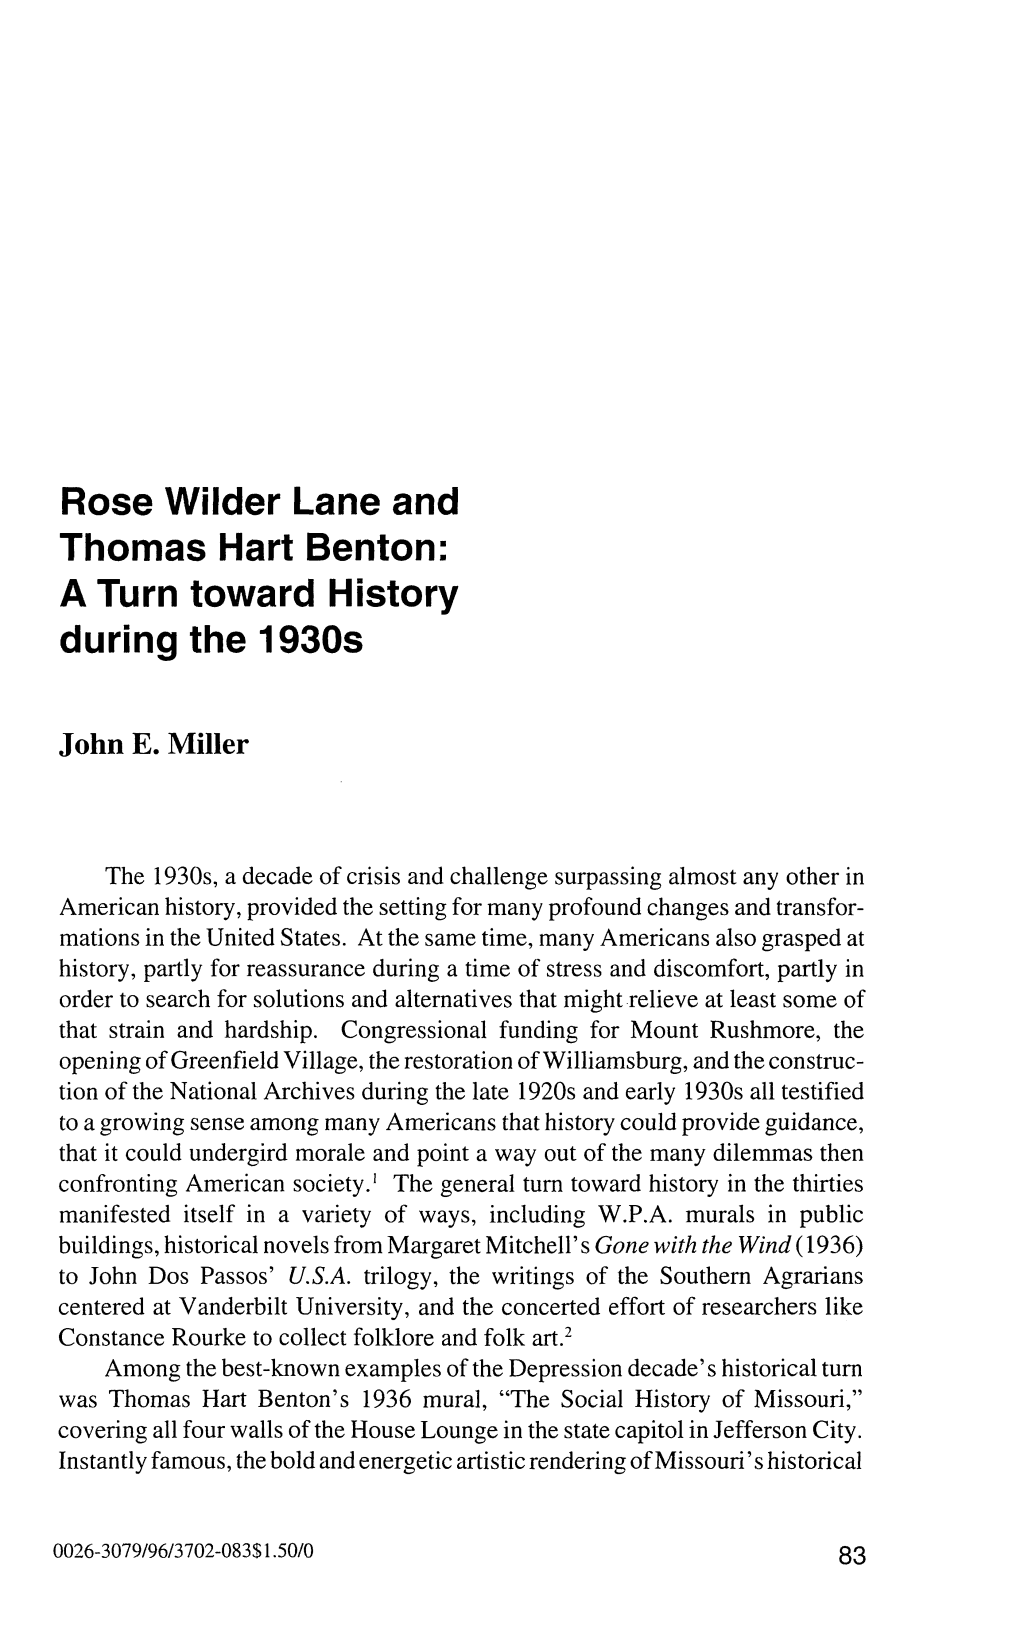 Rose Wilder Lane and Thomas Hart Benton: a Turn Toward History During the 1930S